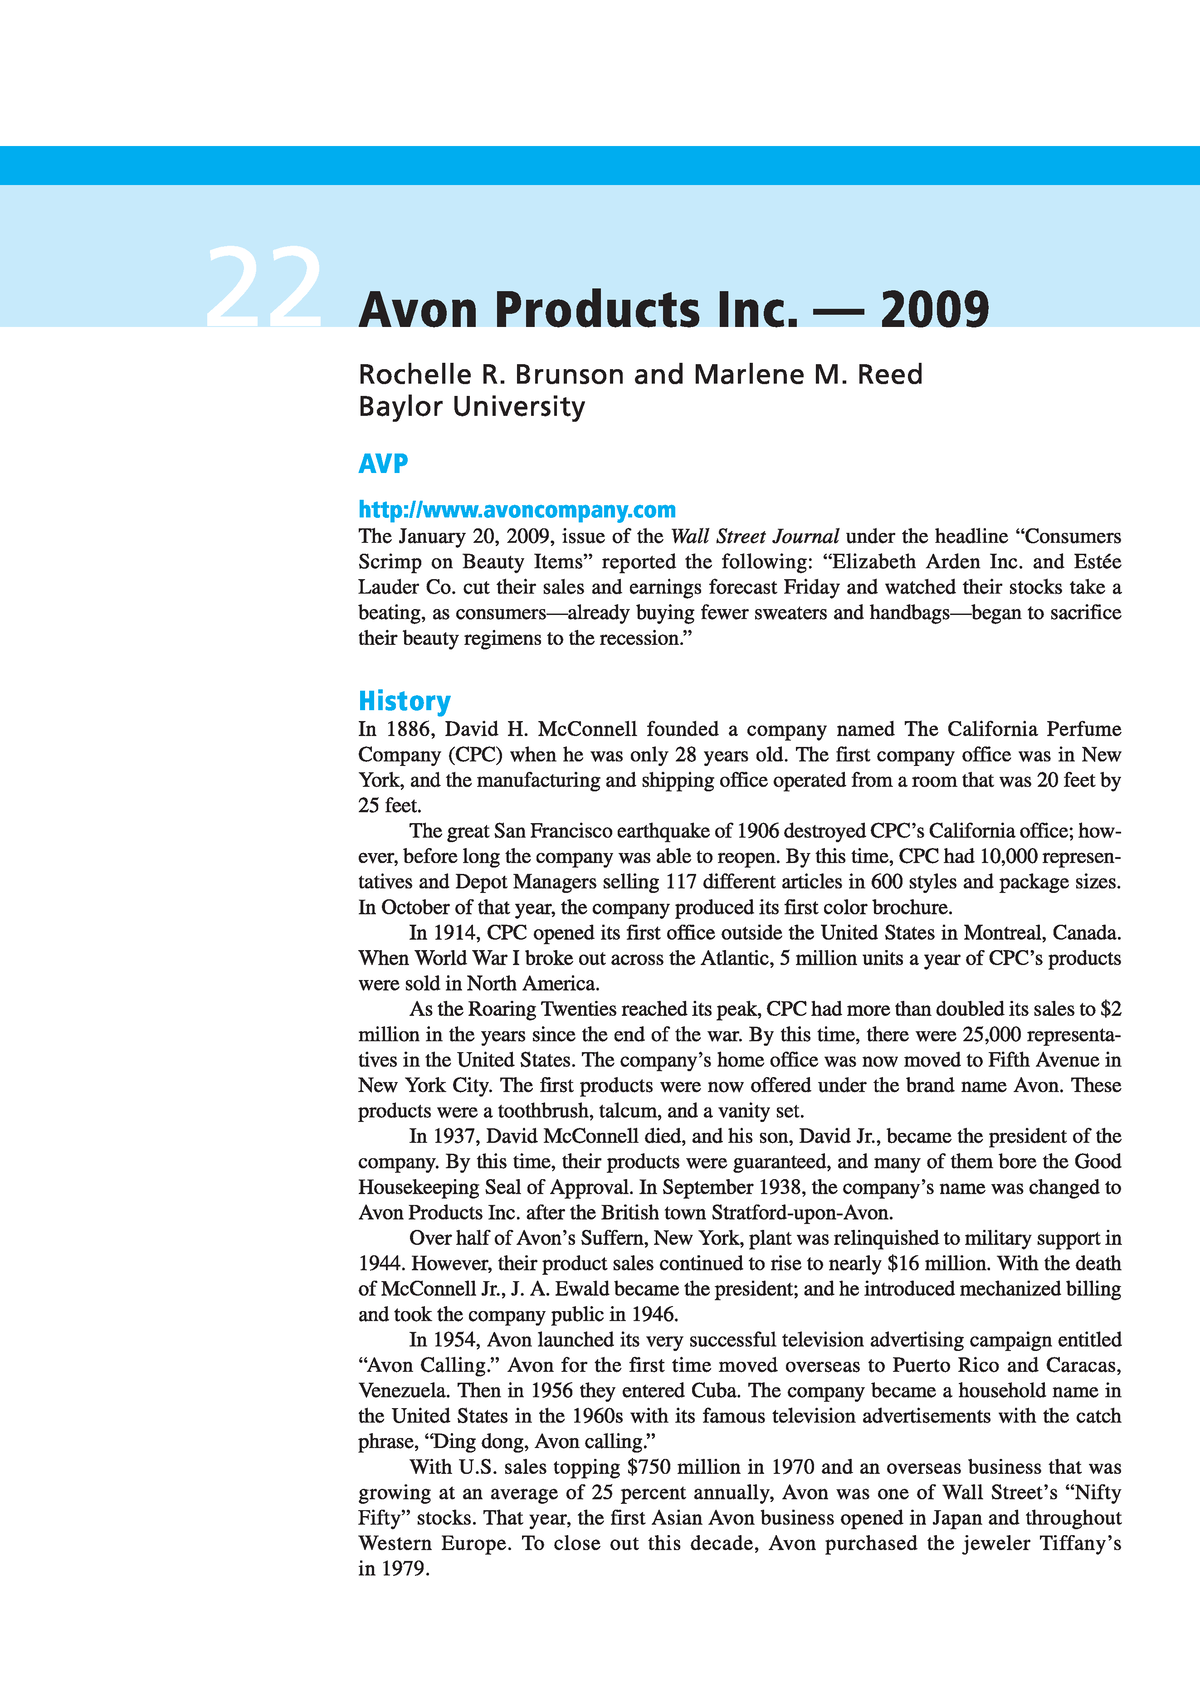 avon case study strategic management pdf